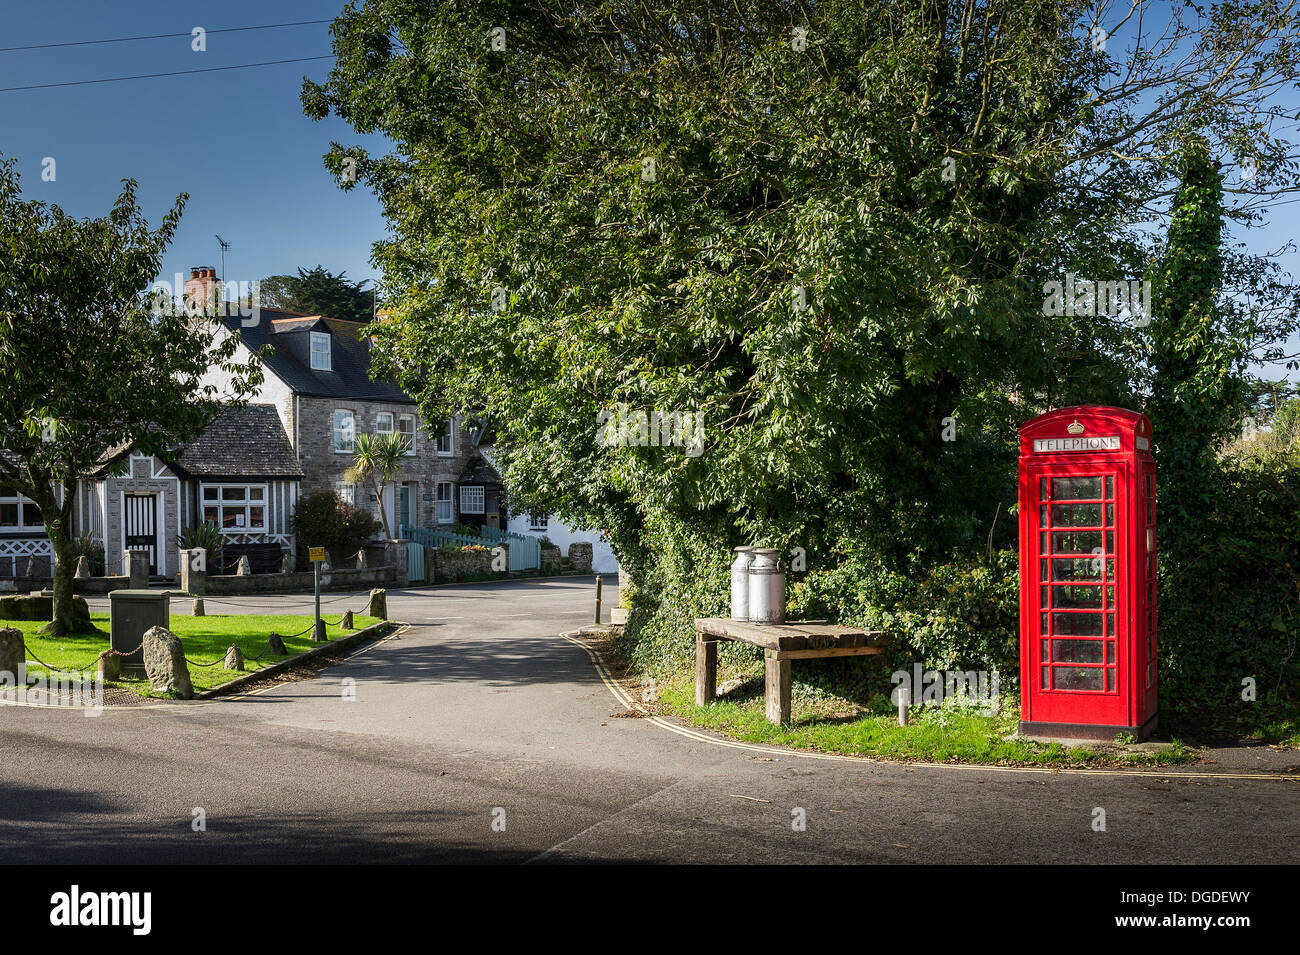 The village square in Crantock in Newquay in Cornwall. Stock Photo